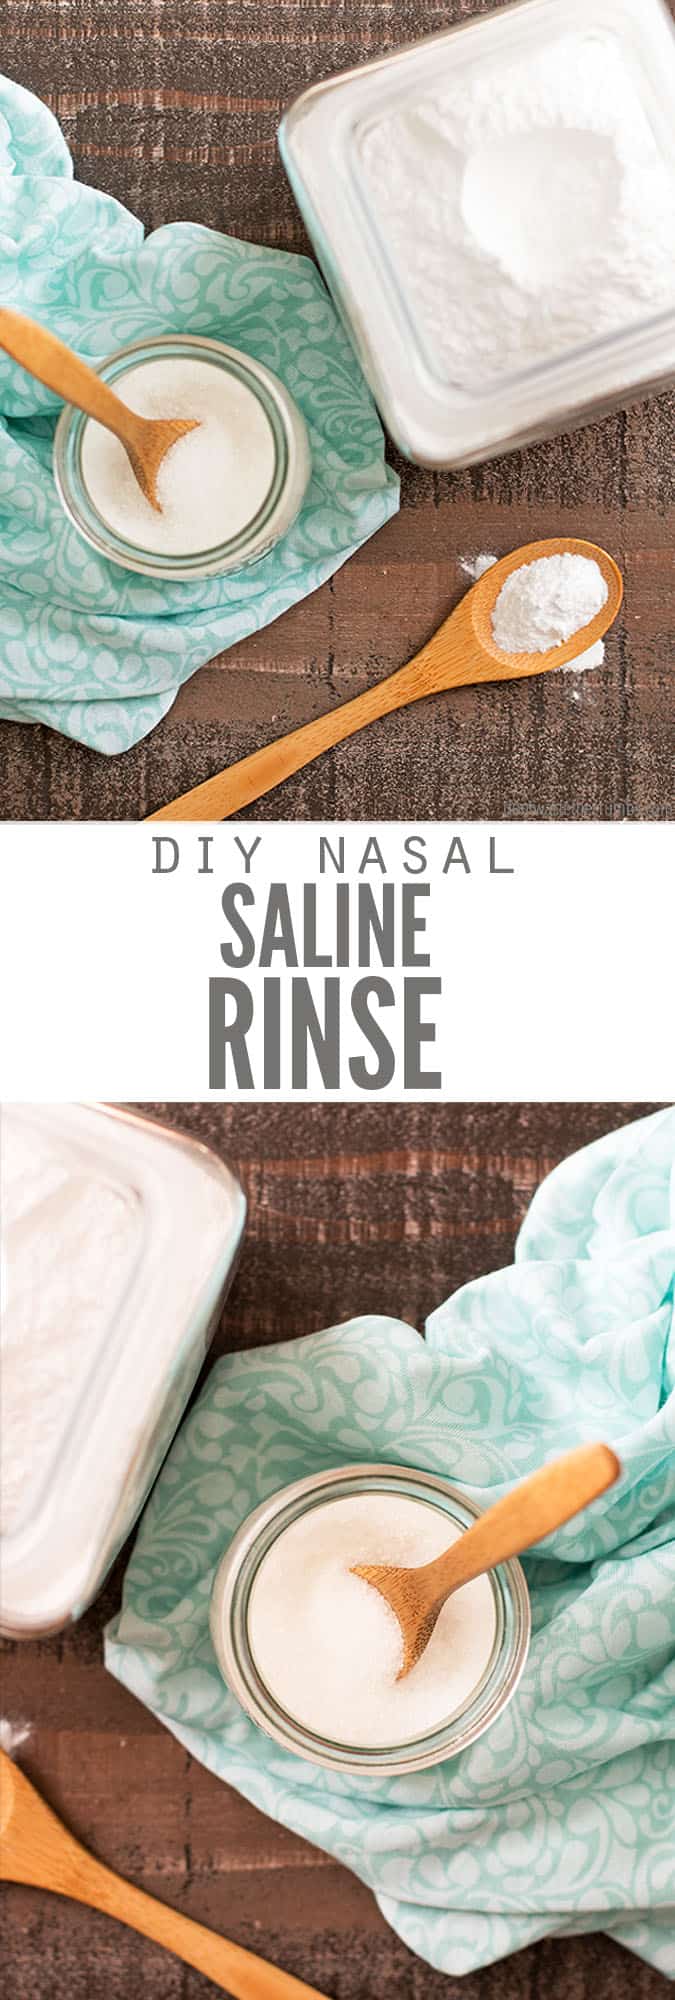 how to make nasal saline at home